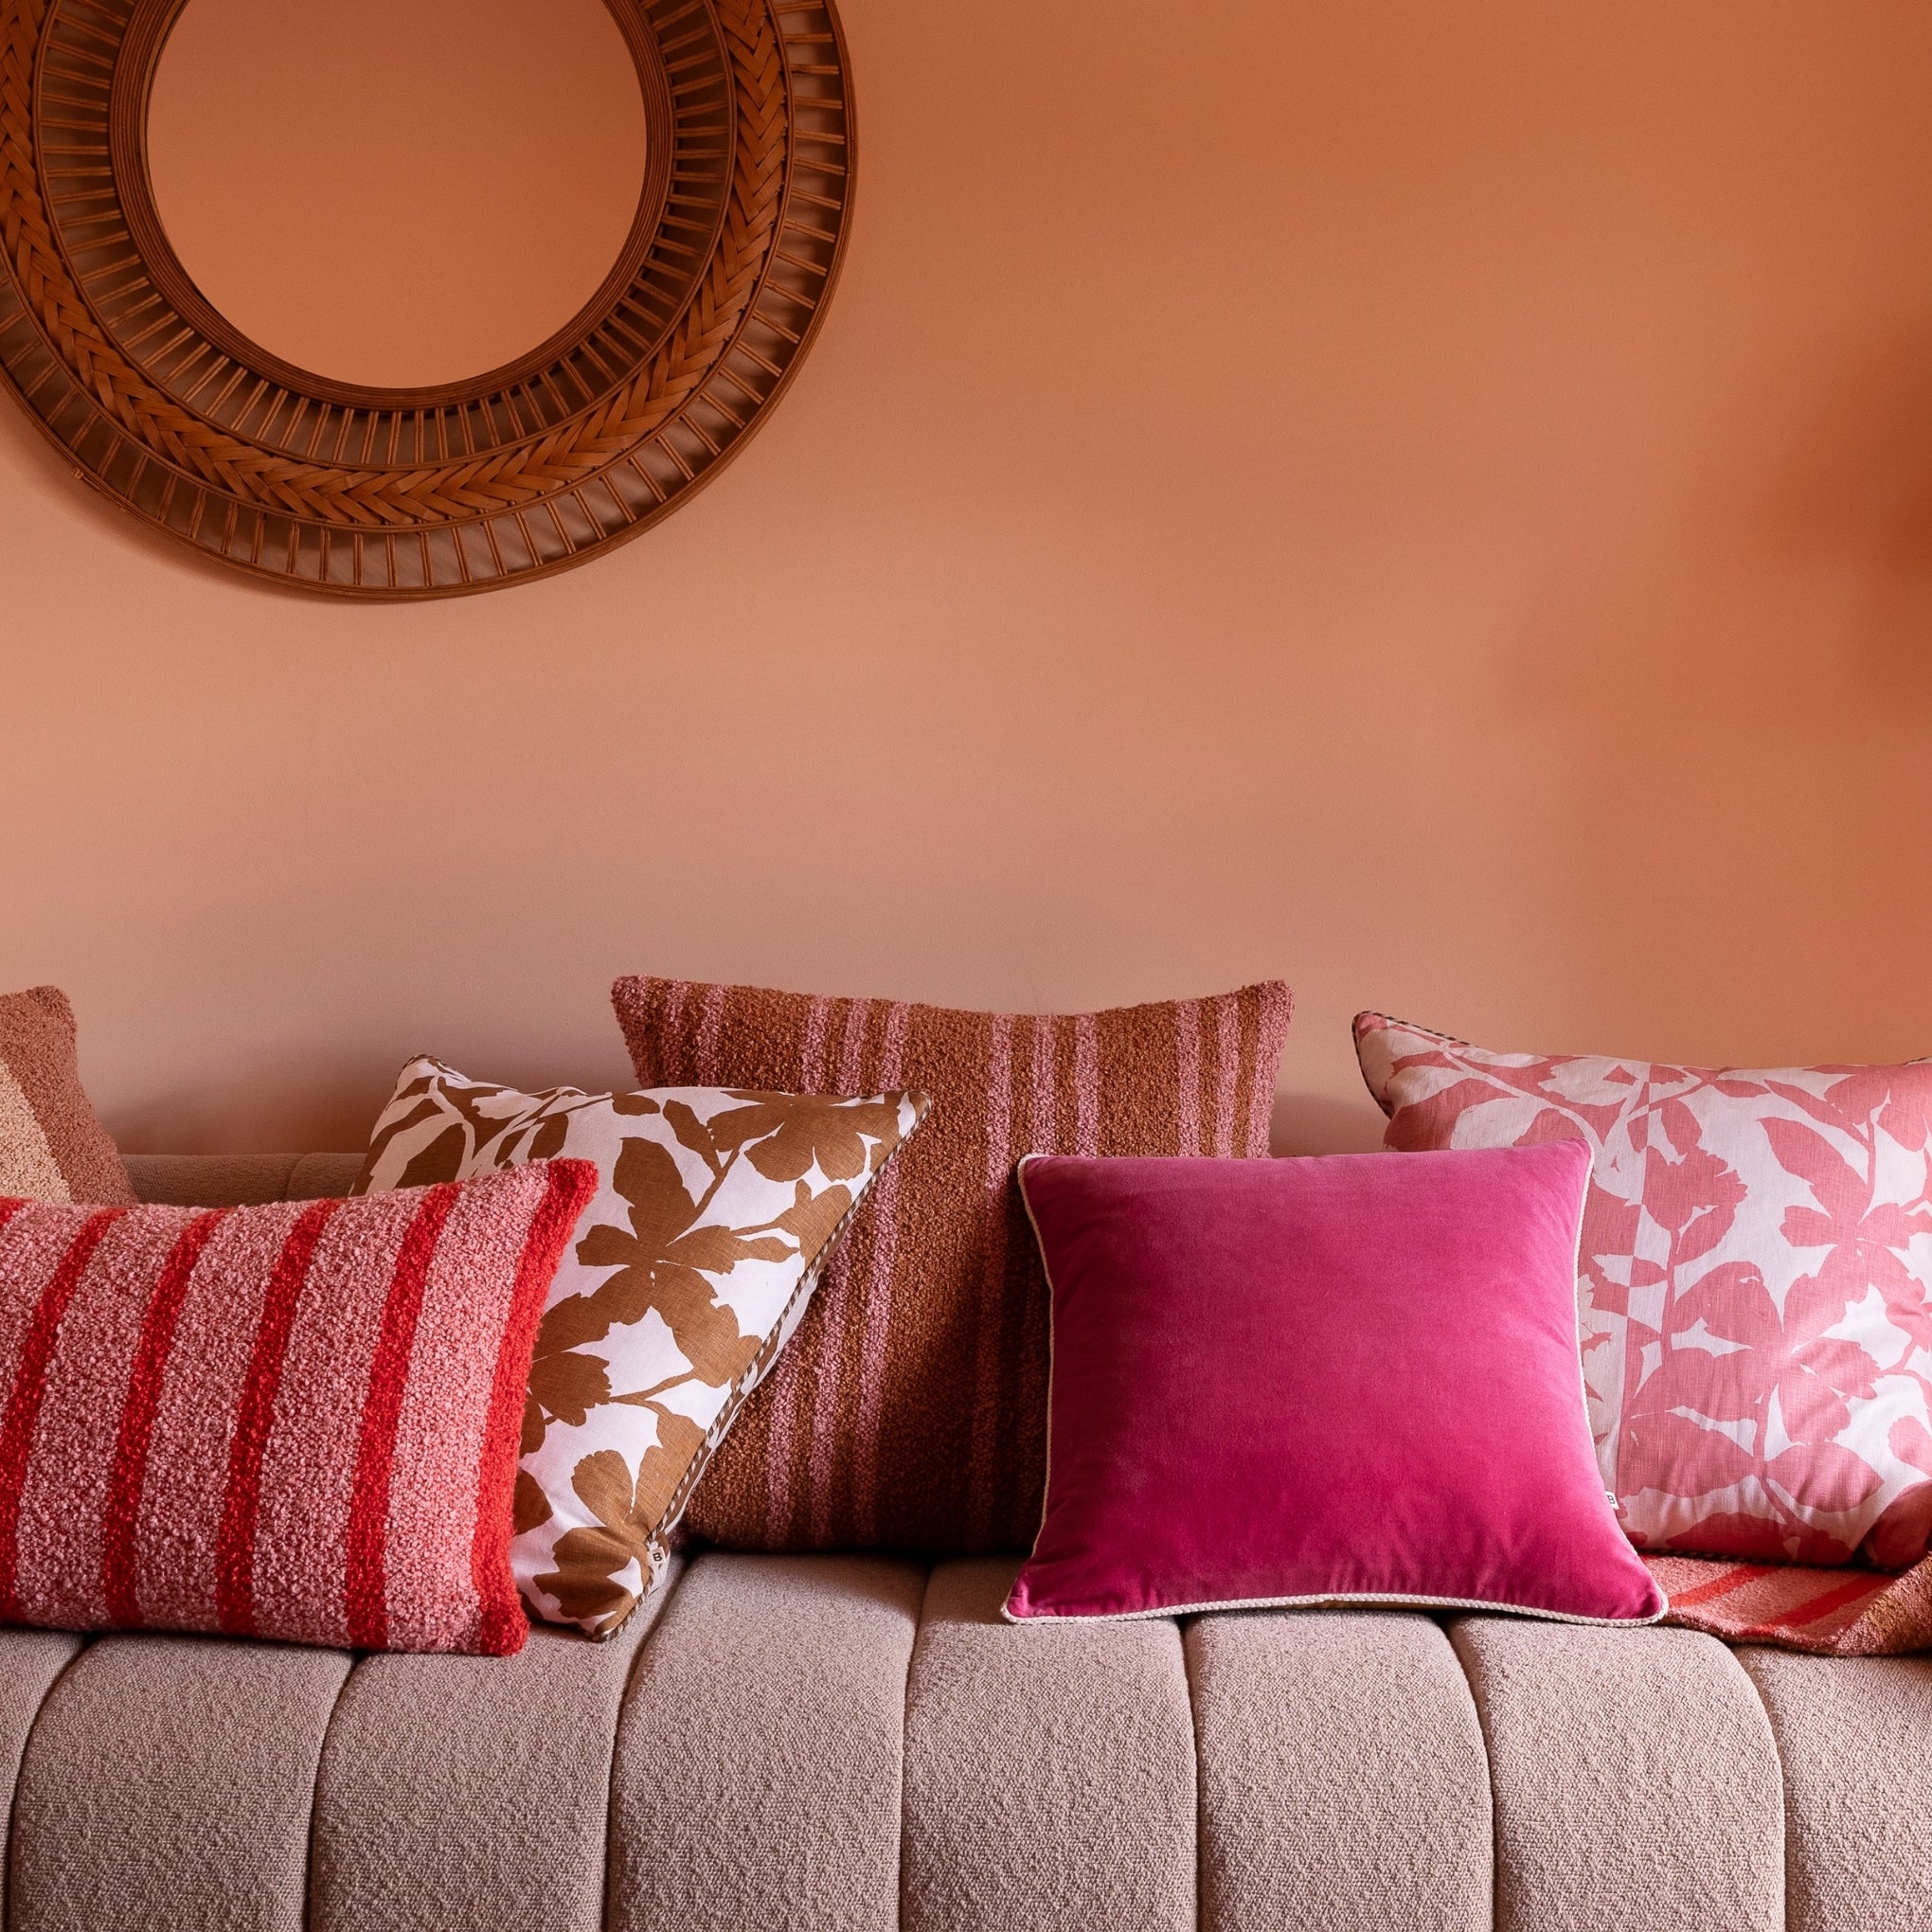 Boucle Trio Stripe Tan Pink 60cm Cushion